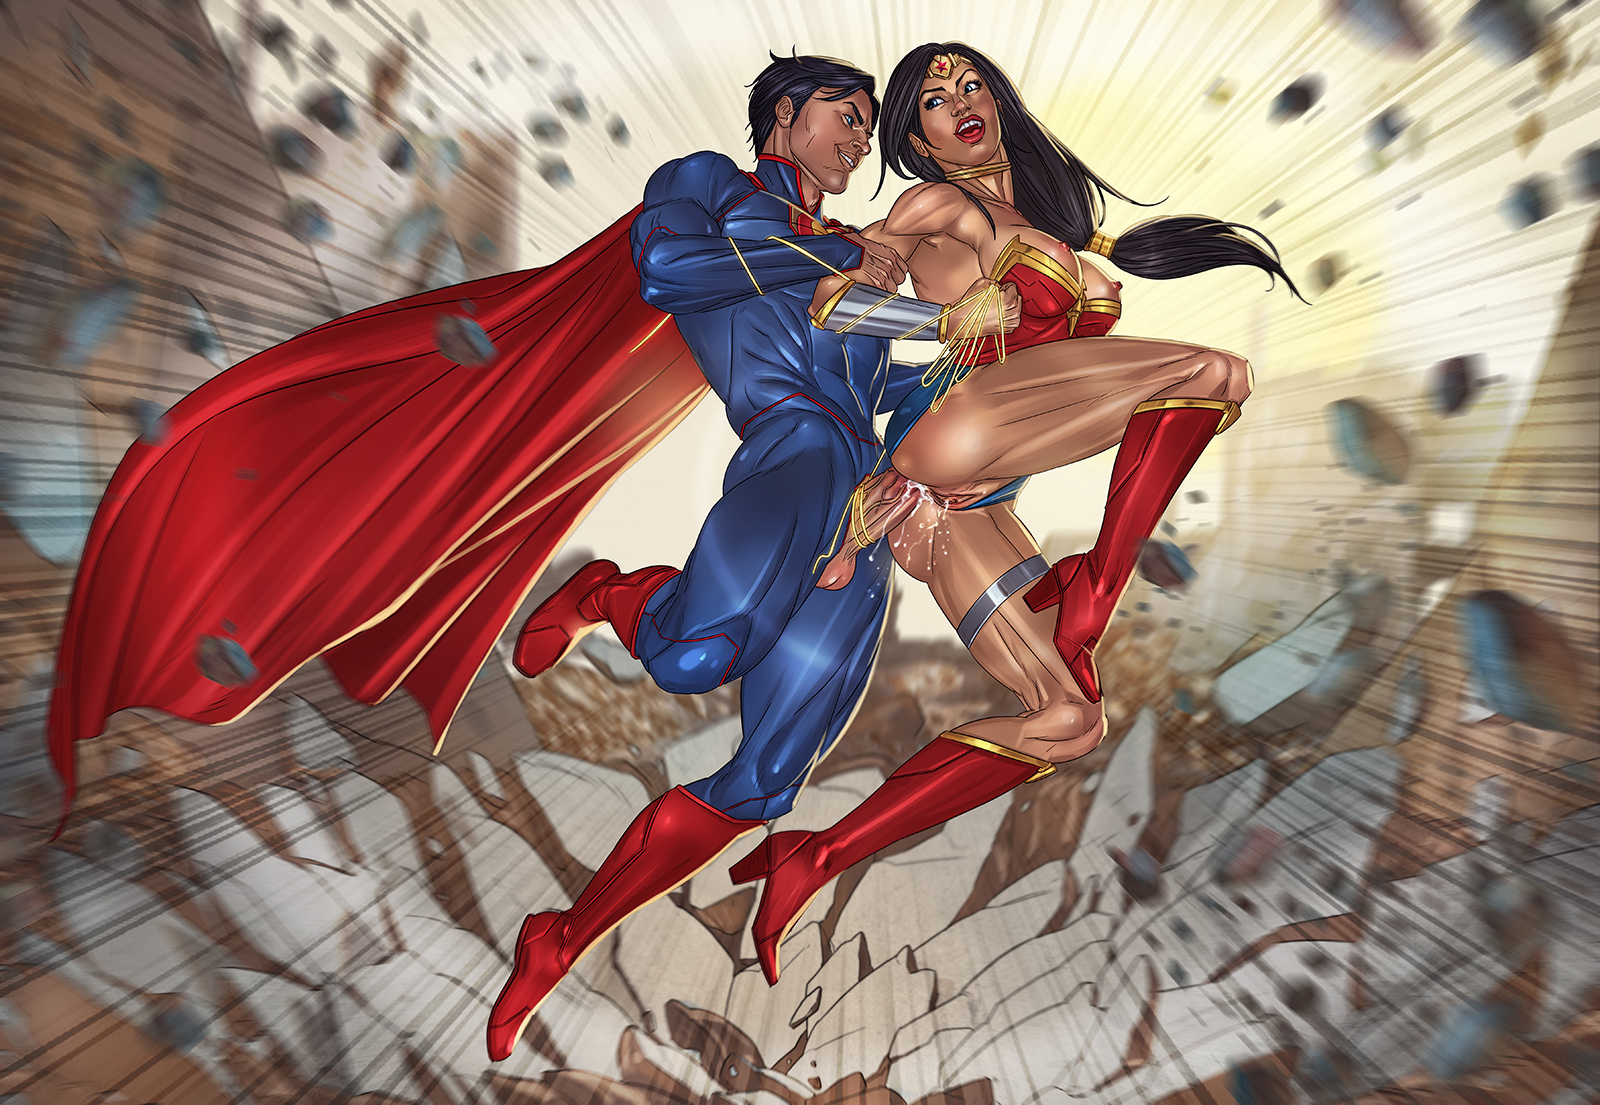 Rule 34 superman - 🧡 Post some new wonder woman pics - /aco/ - Adult Carto...